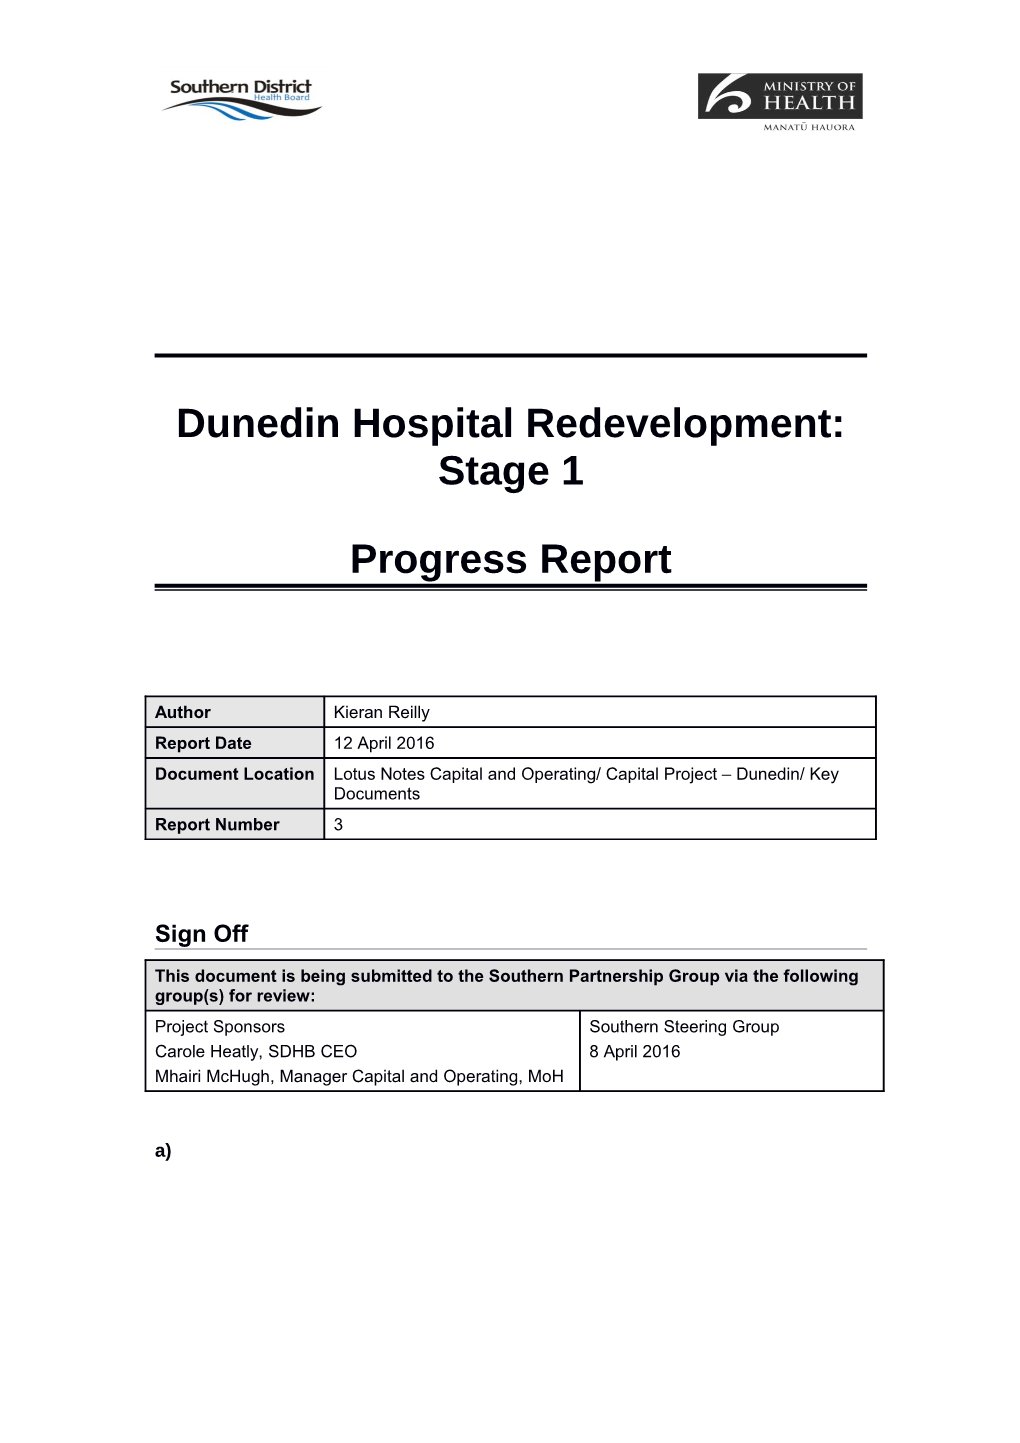 Dunedin Hospital Redevelopment: Stage 1